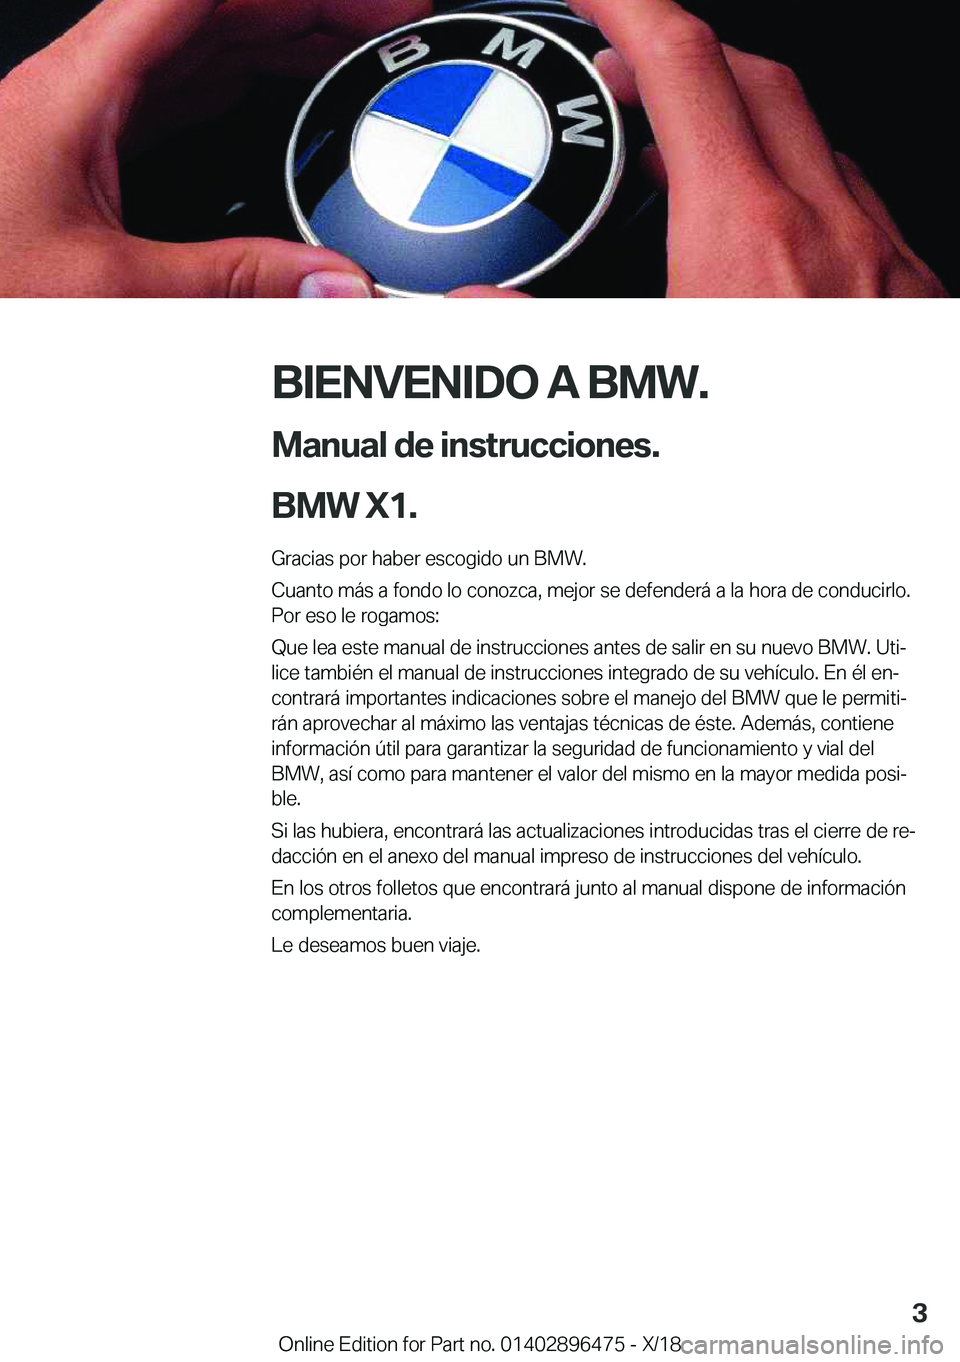 BMW X1 2019  Manuales de Empleo (in Spanish) �B�I�E�N�V�E�N�I�D�O��A��B�M�W�.
�M�a�n�u�a�l��d�e��i�n�s�t�r�u�c�c�i�o�n�e�s�.
�B�M�W��X�1�. �G�r�a�c�i�a�s��p�o�r��h�a�b�e�r��e�s�c�o�g�i�d�o��u�n��B�M�W�.�C�u�a�n�t�o��m�